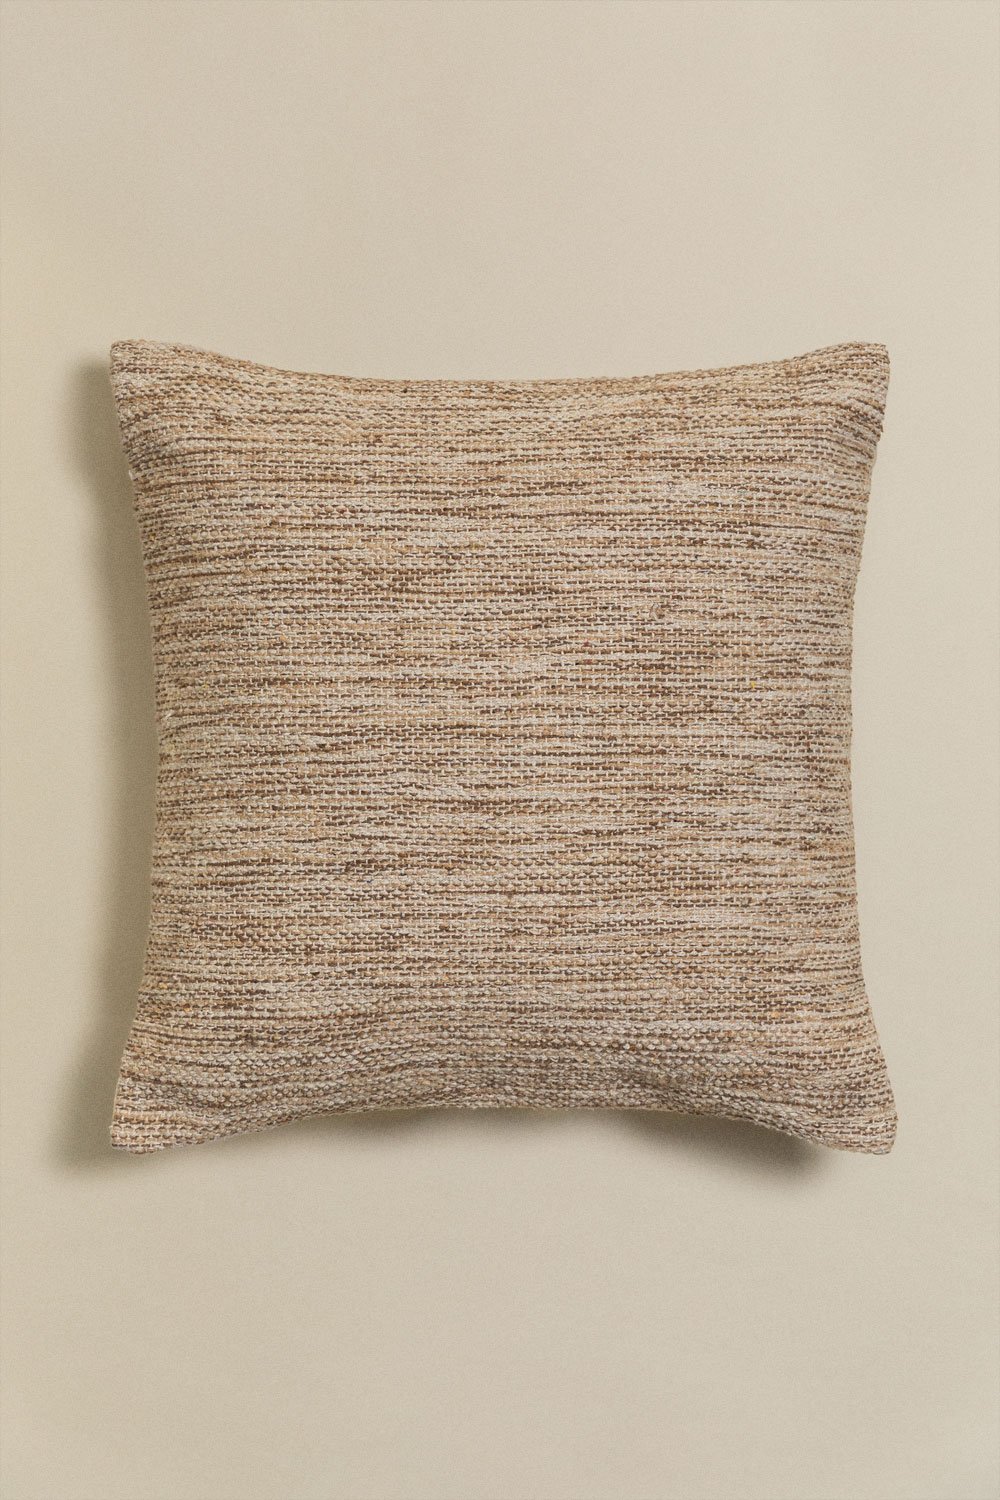 Square Cotton Cushion (45x45 cm) Mayniel, gallery image 1